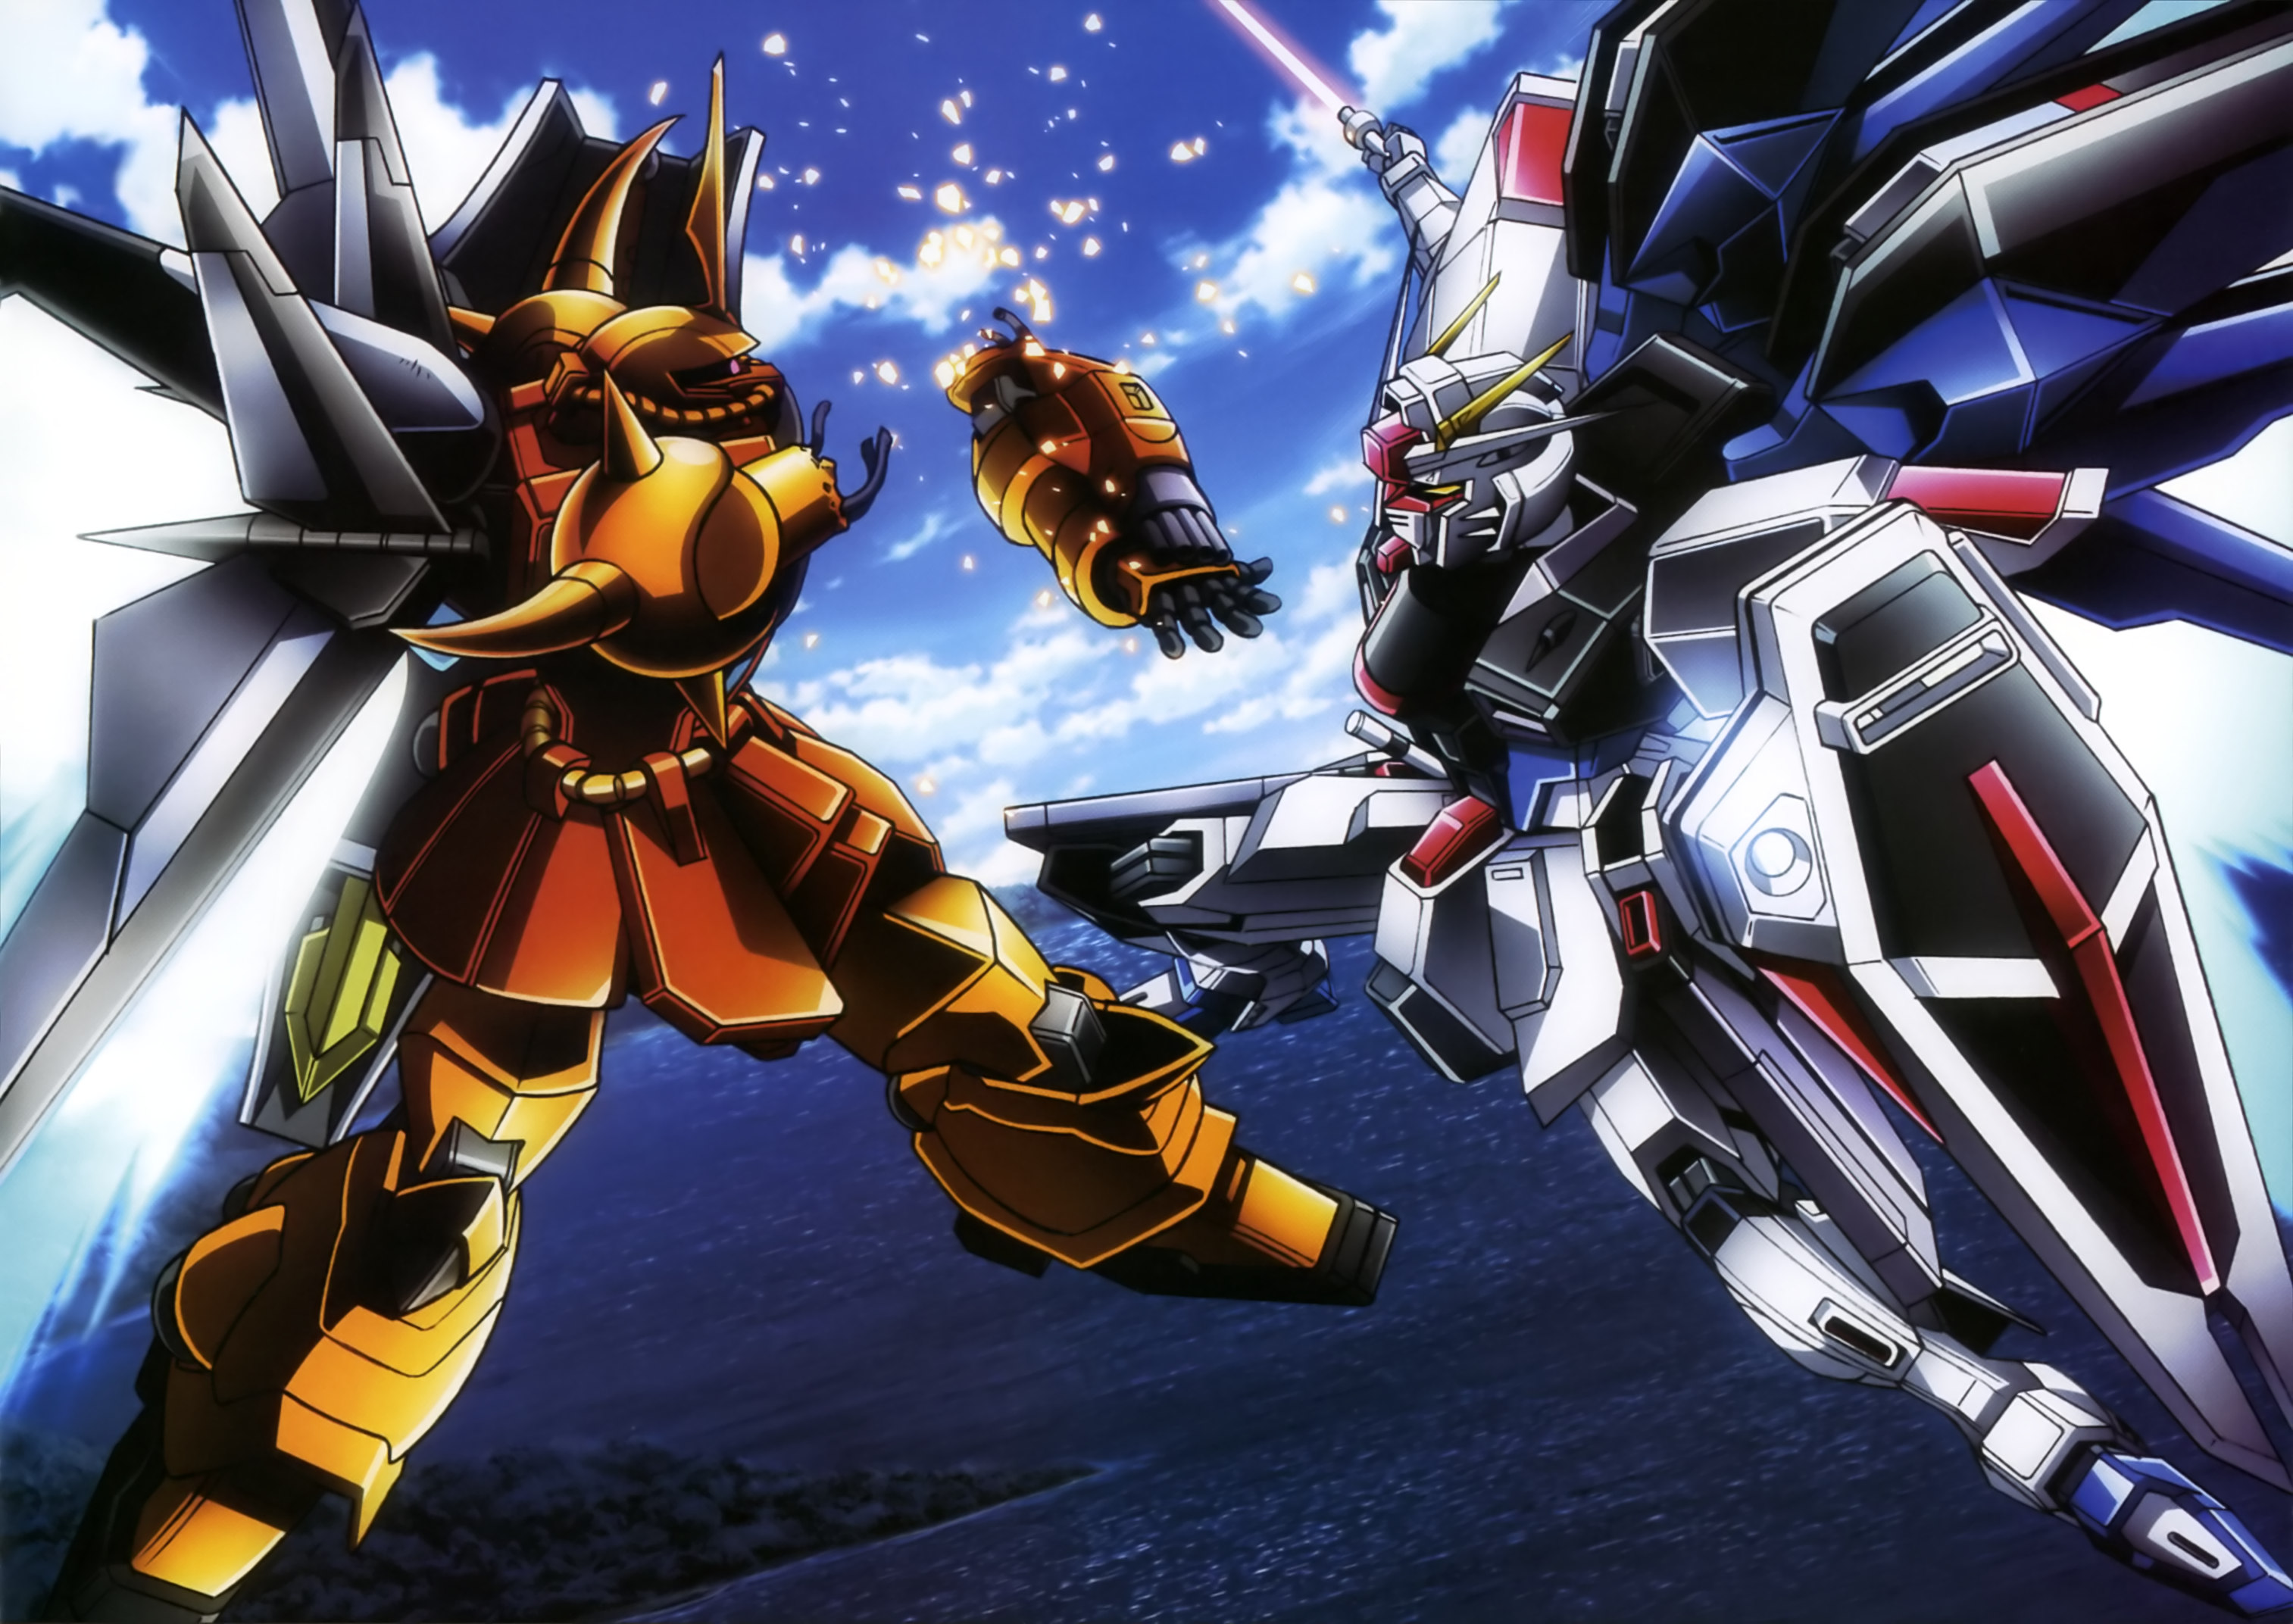 Download Anime Mobile Suit Gundam Seed Destiny Hd Wallpaper